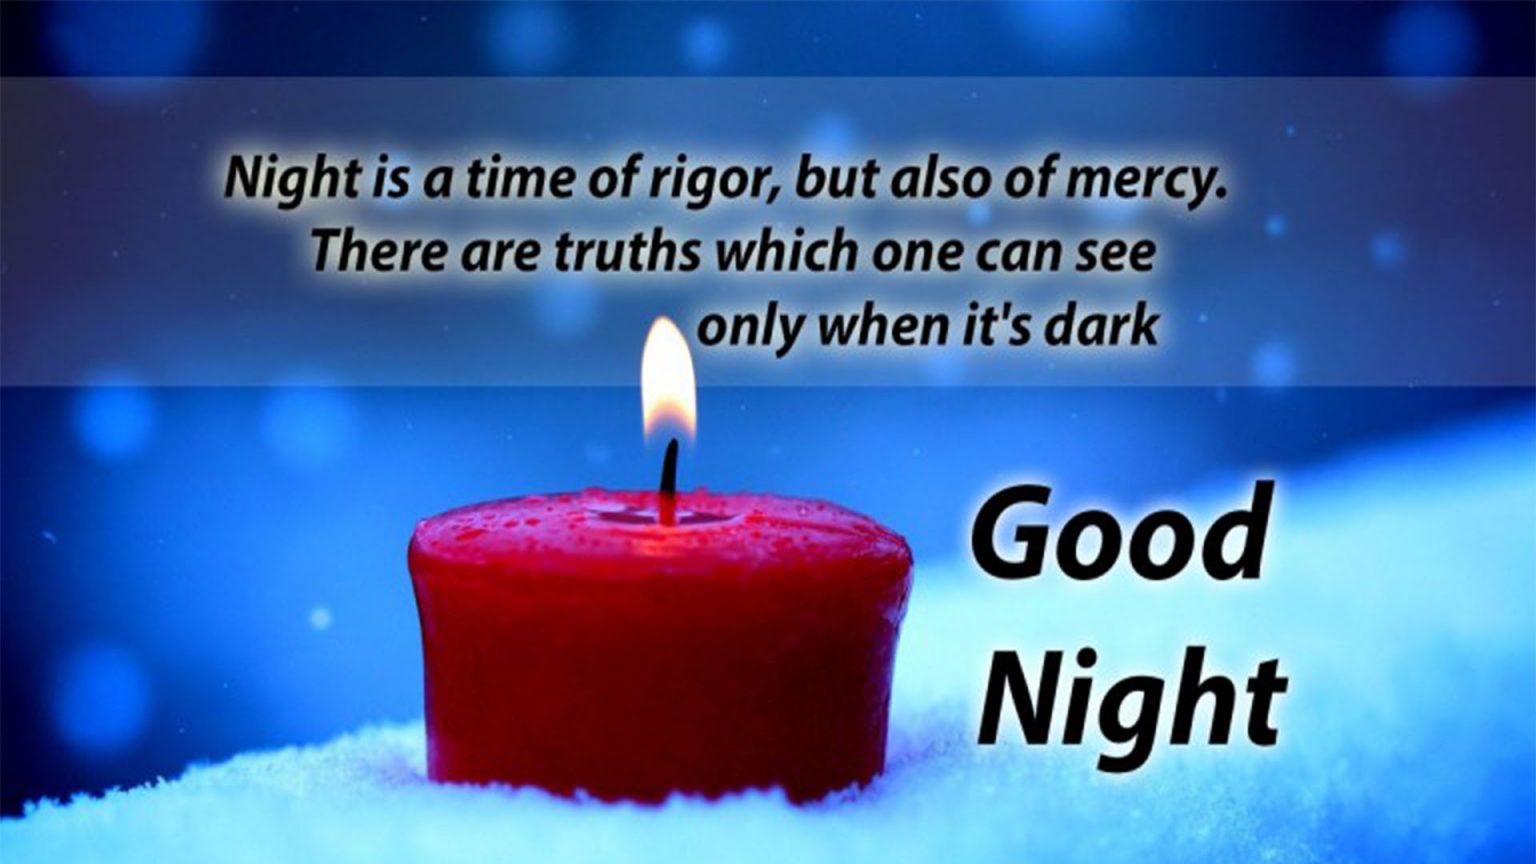 Gud Night Quotes Image 1536x864 